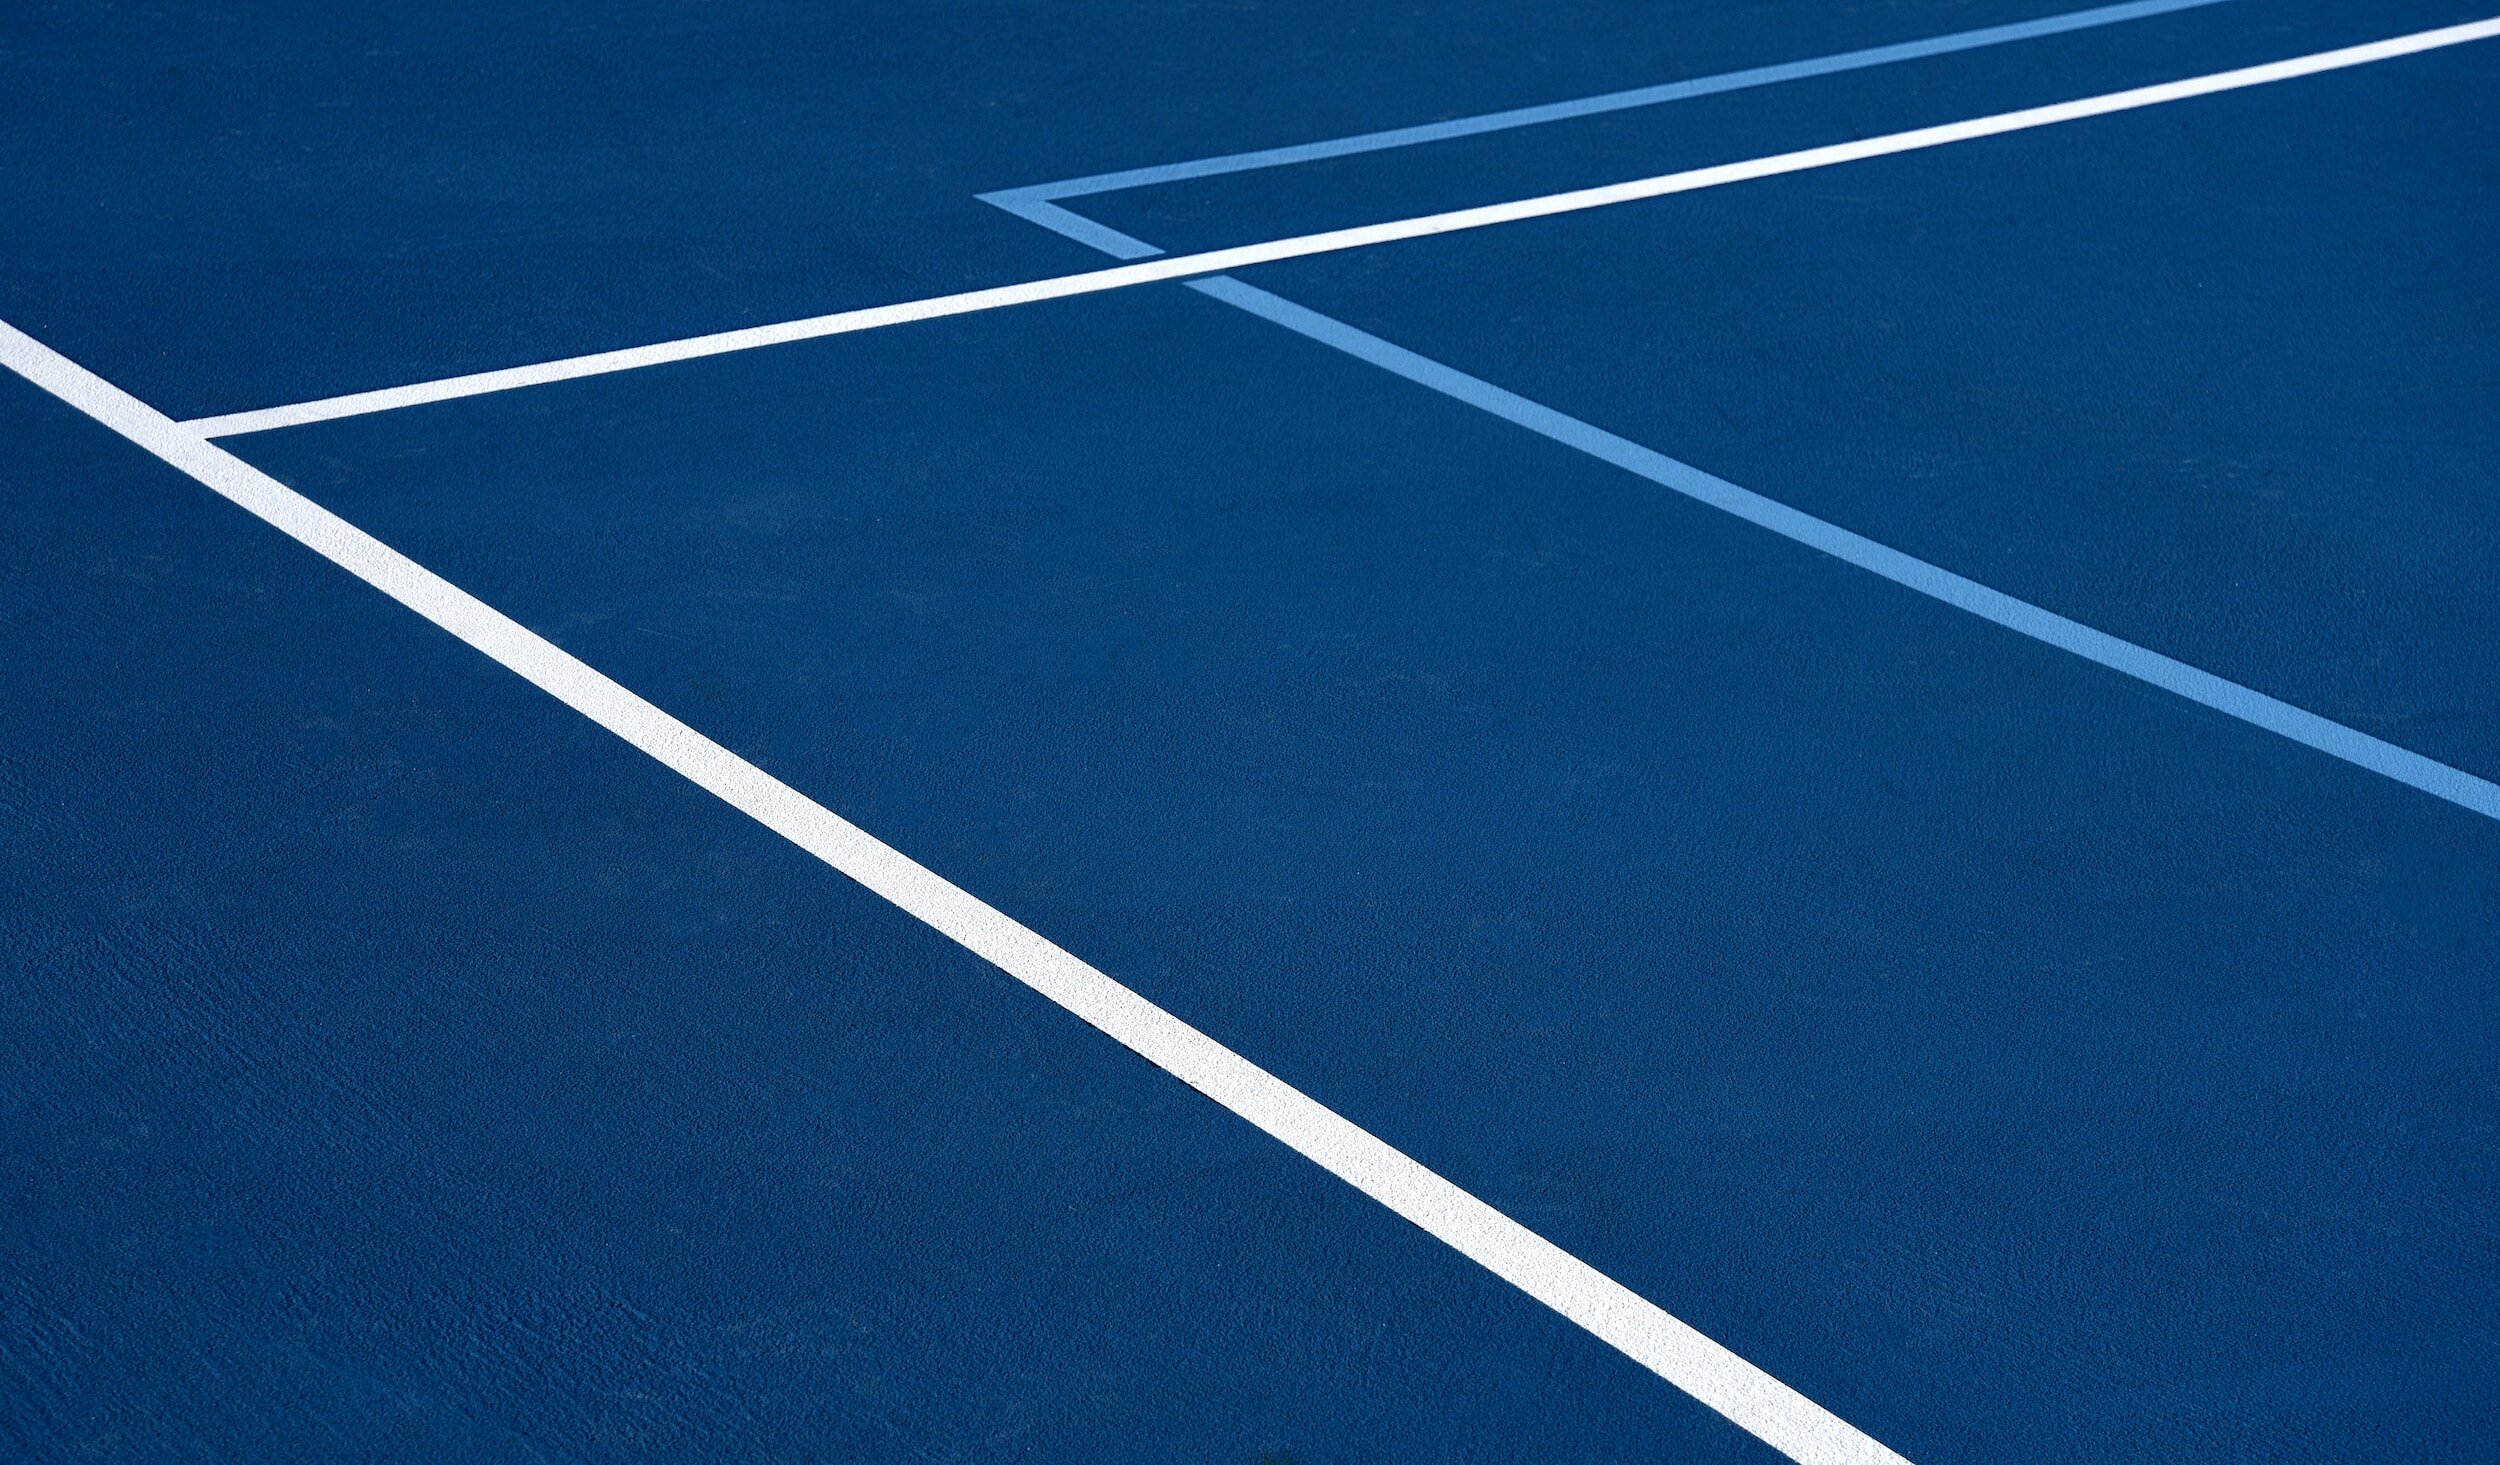 KTC/Quail - Dayton's Favorite Tennis Club